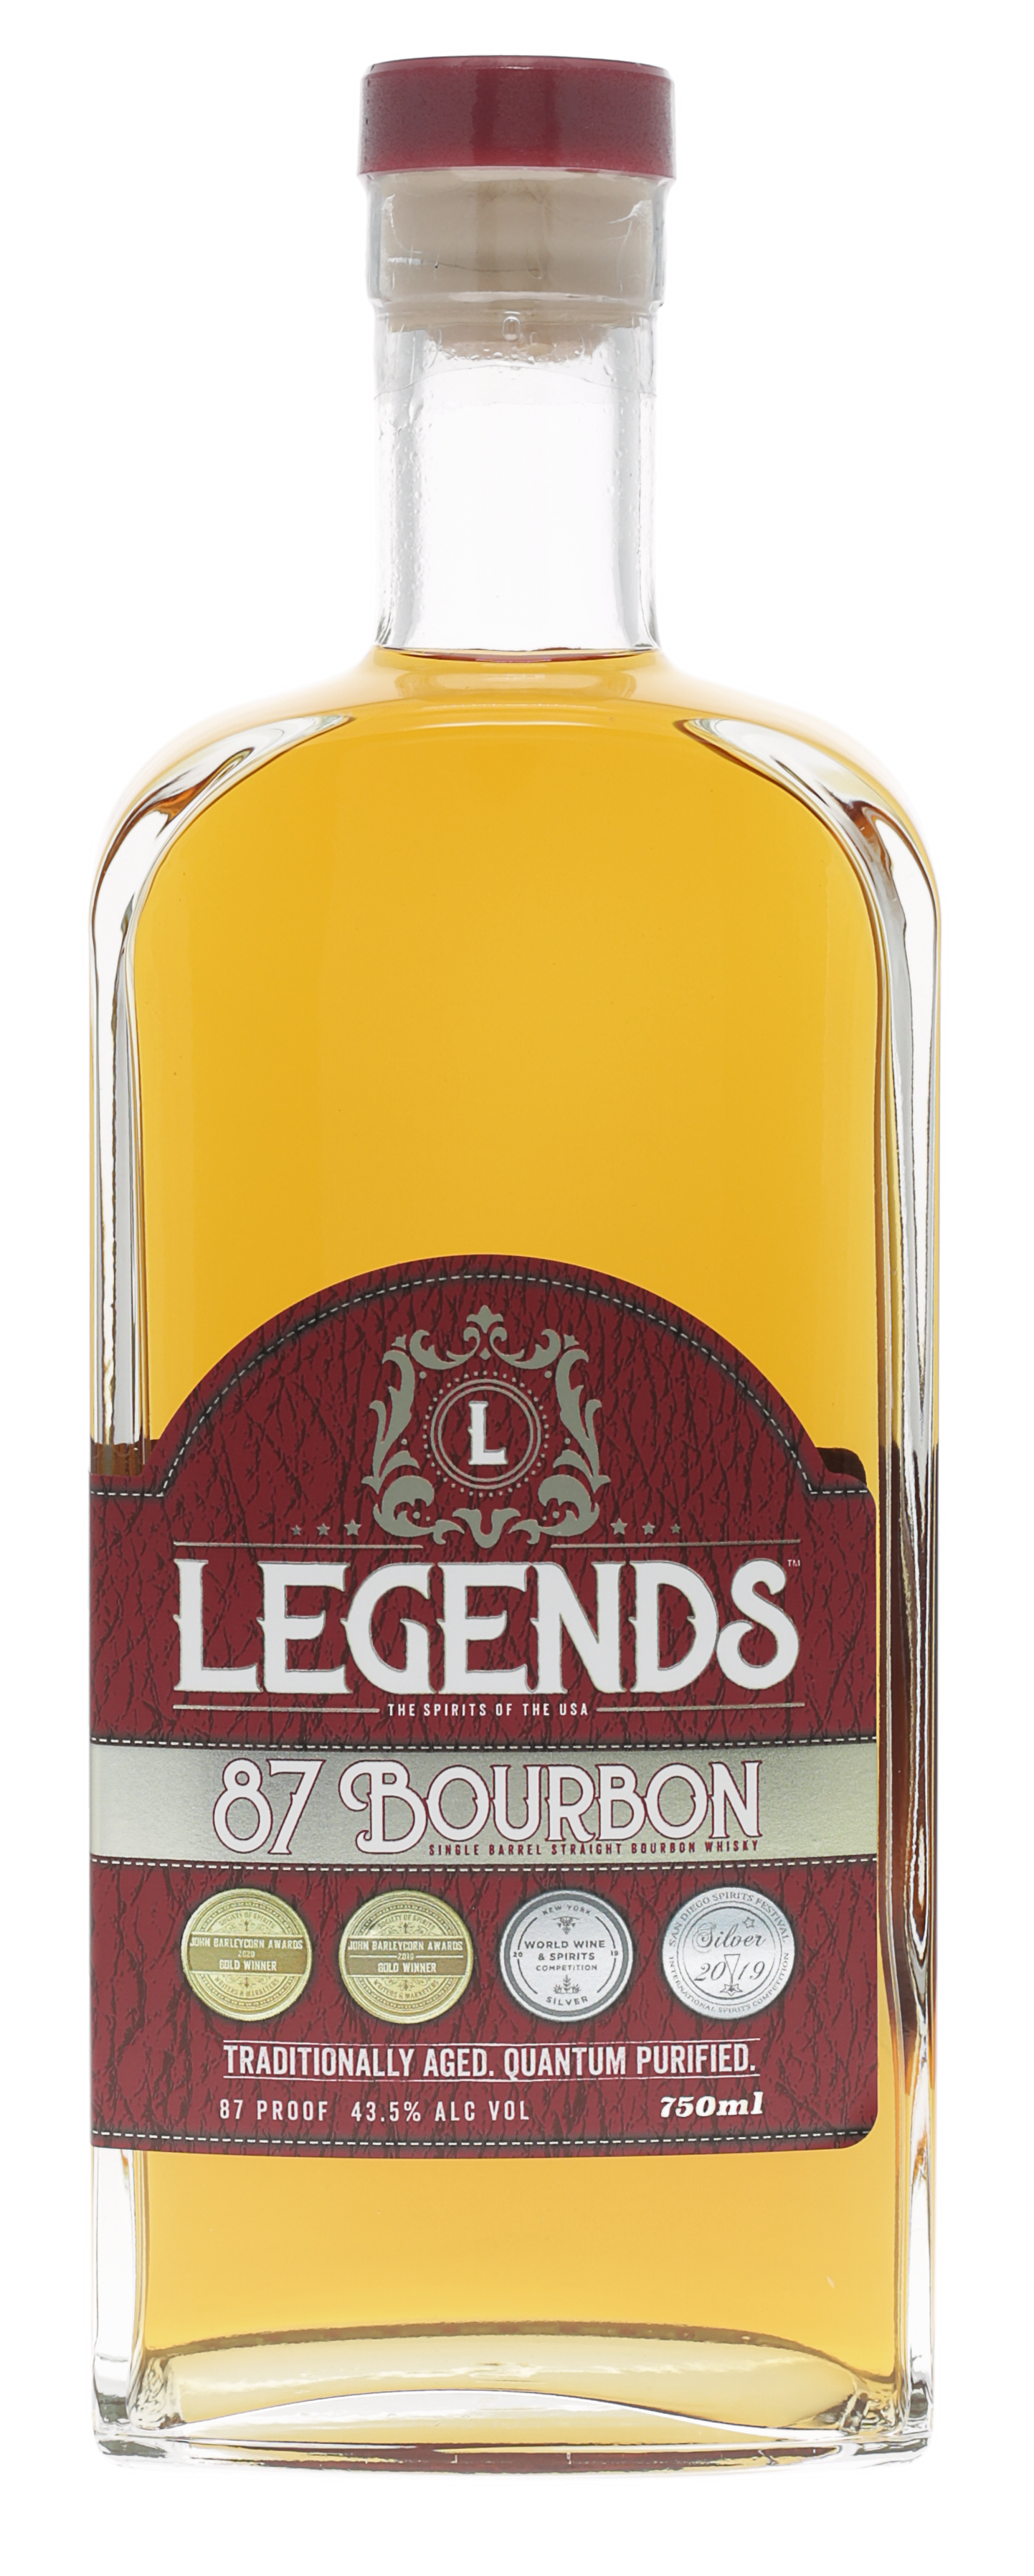 Legends 87 Bourbon